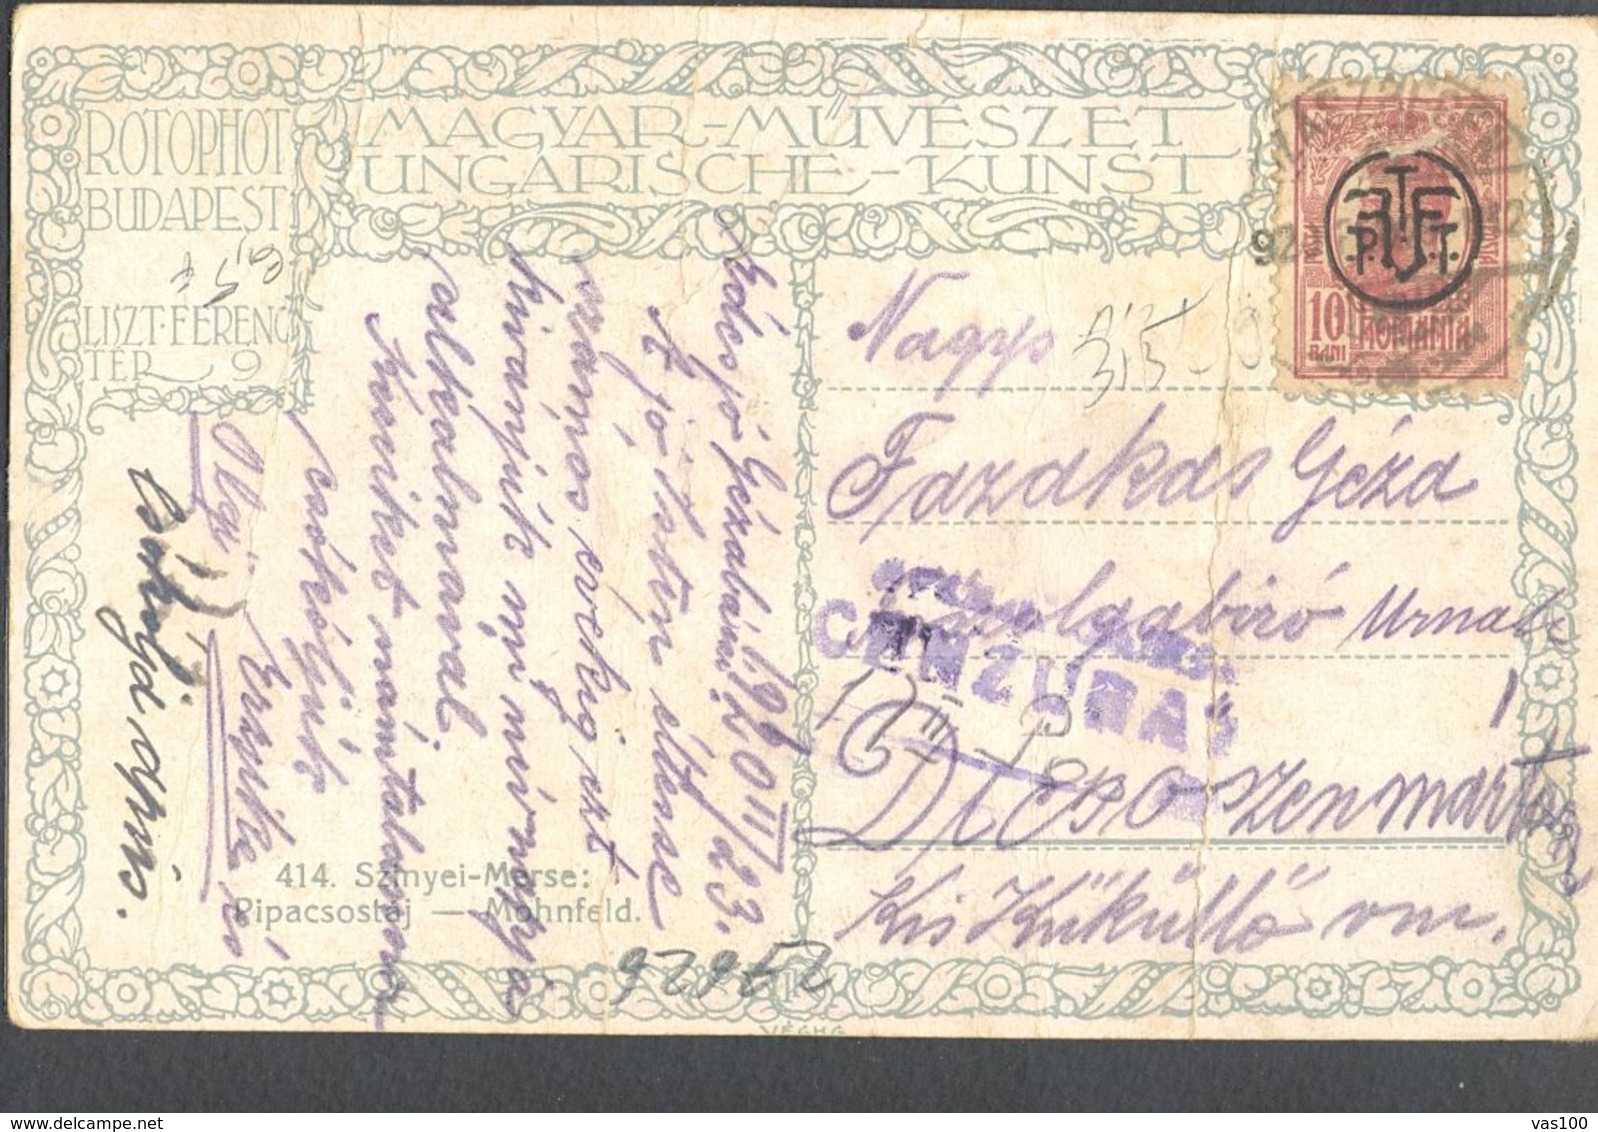 WW1 CENSORSHIP ON SZMYEI- POPPY FIELD PAINTING POSTCARD, 1920, ROMANIA - World War 1 Letters